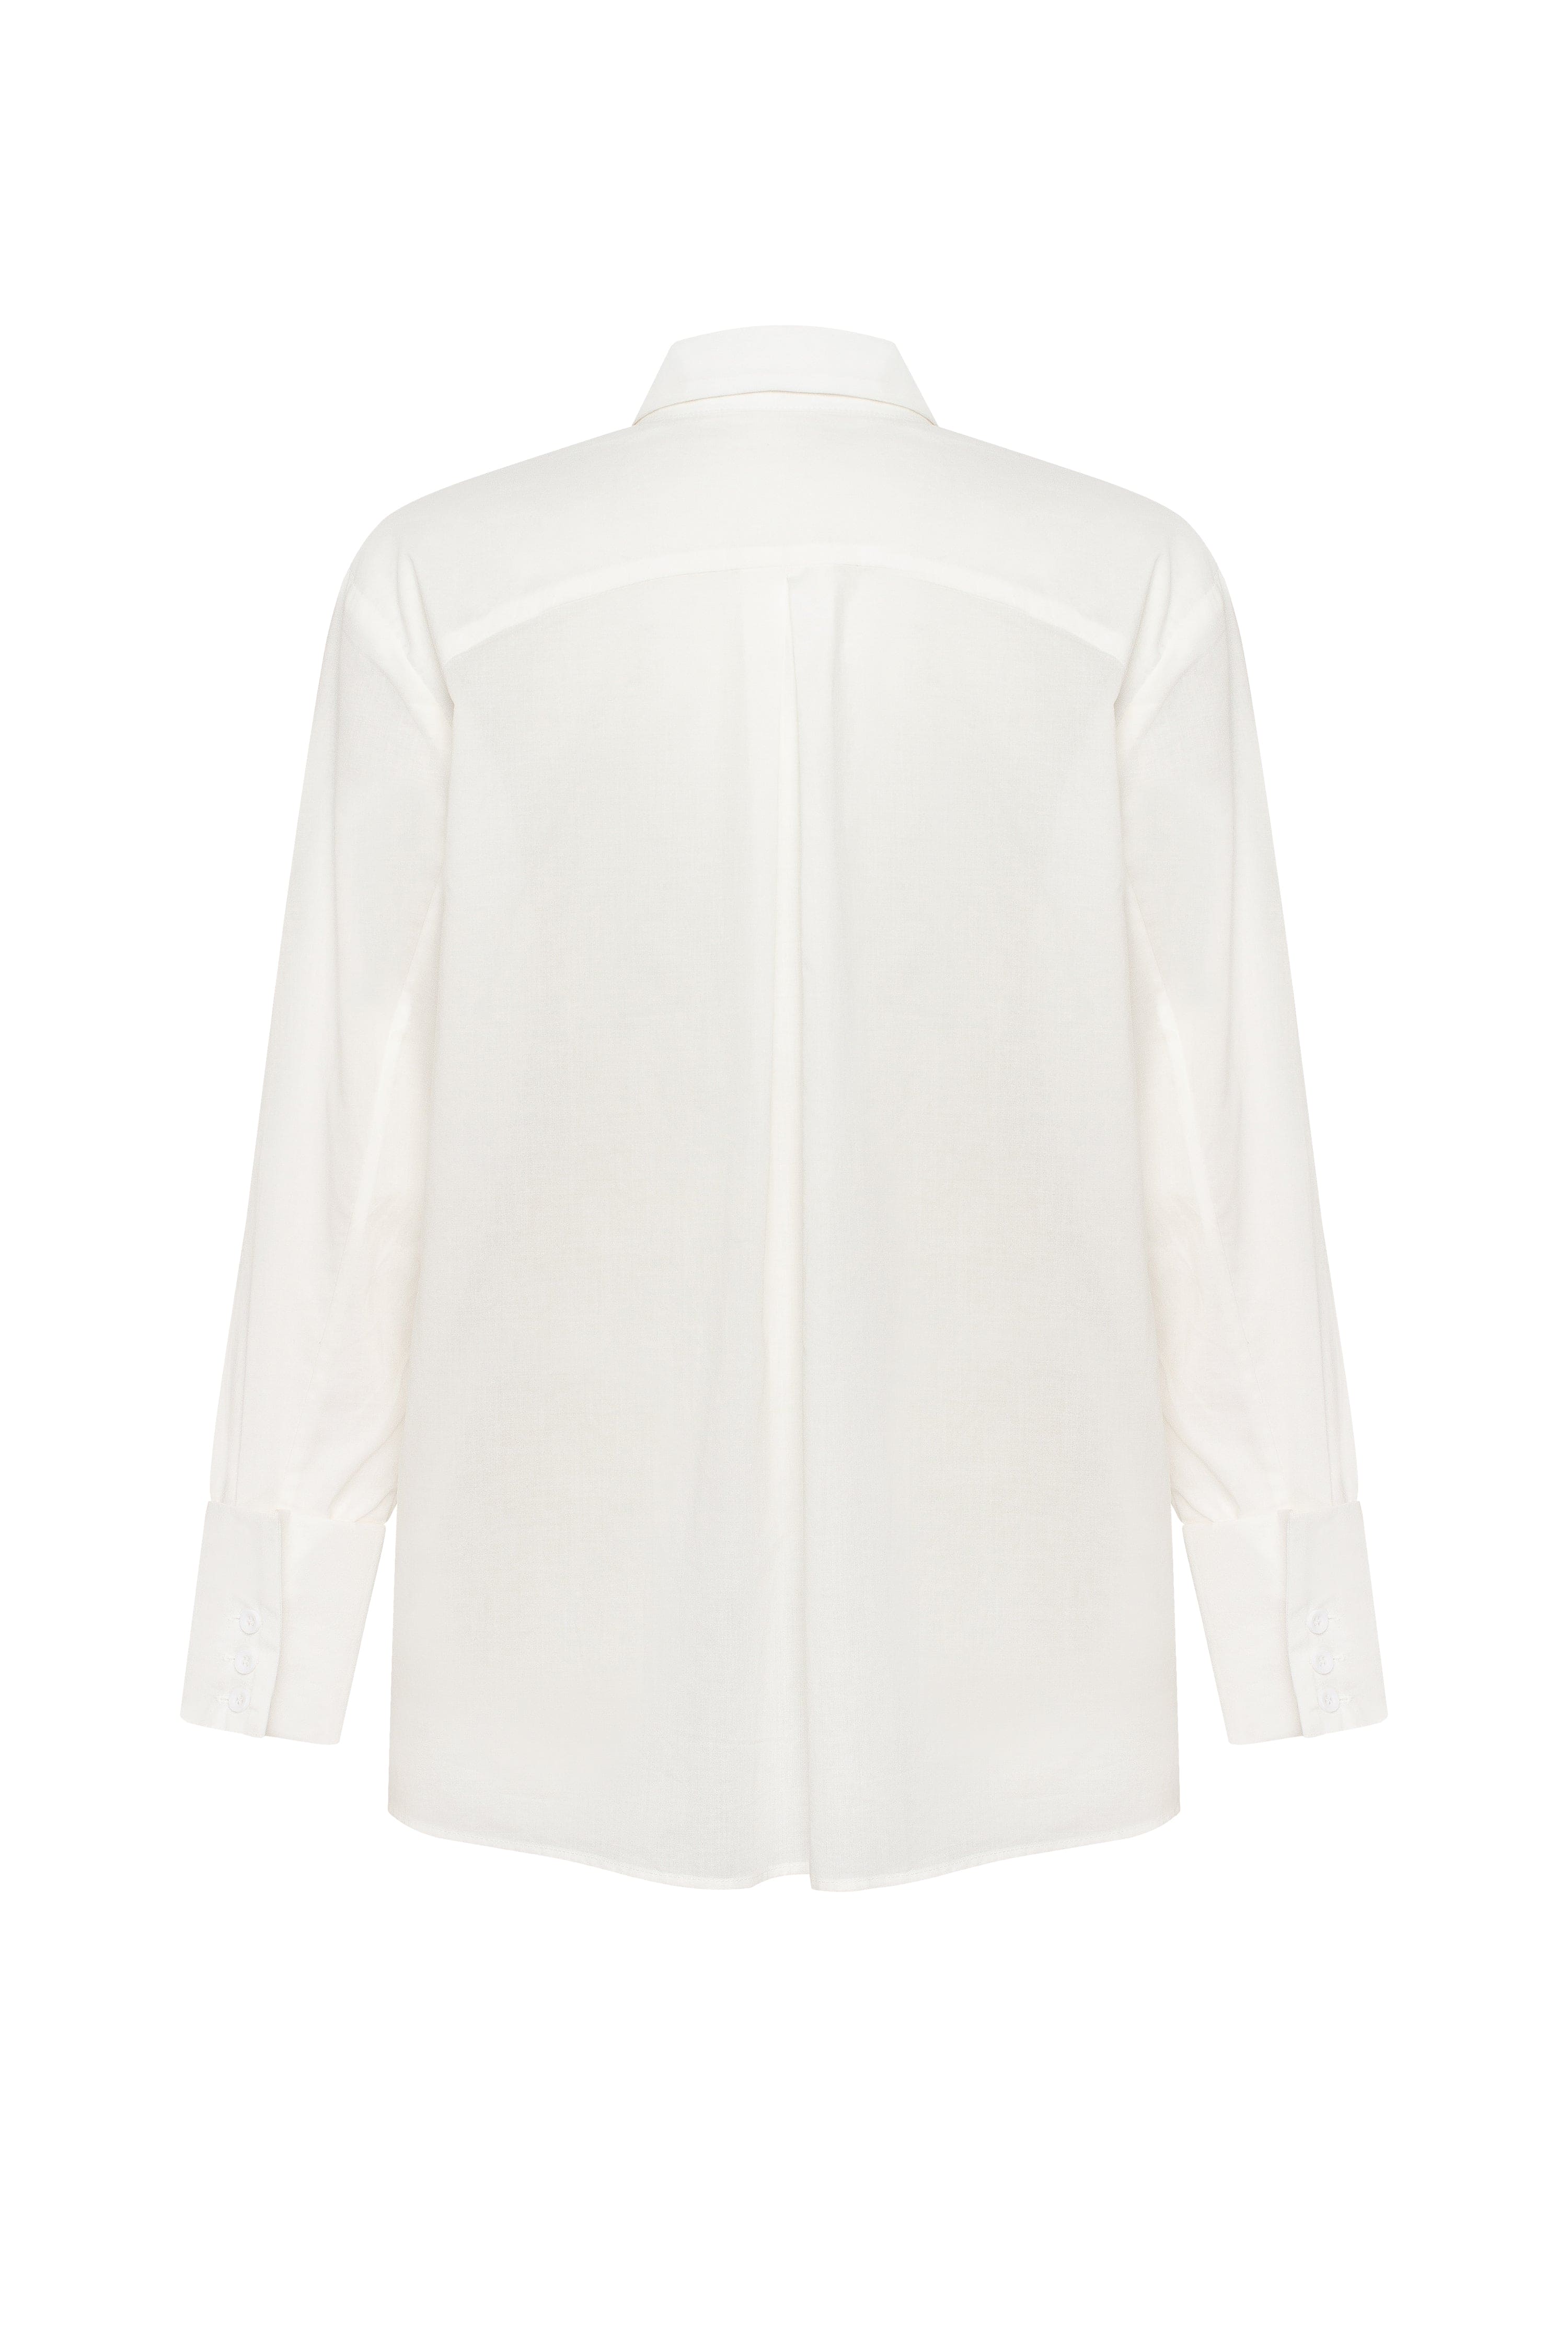 Classic white blouse, Xo Xo